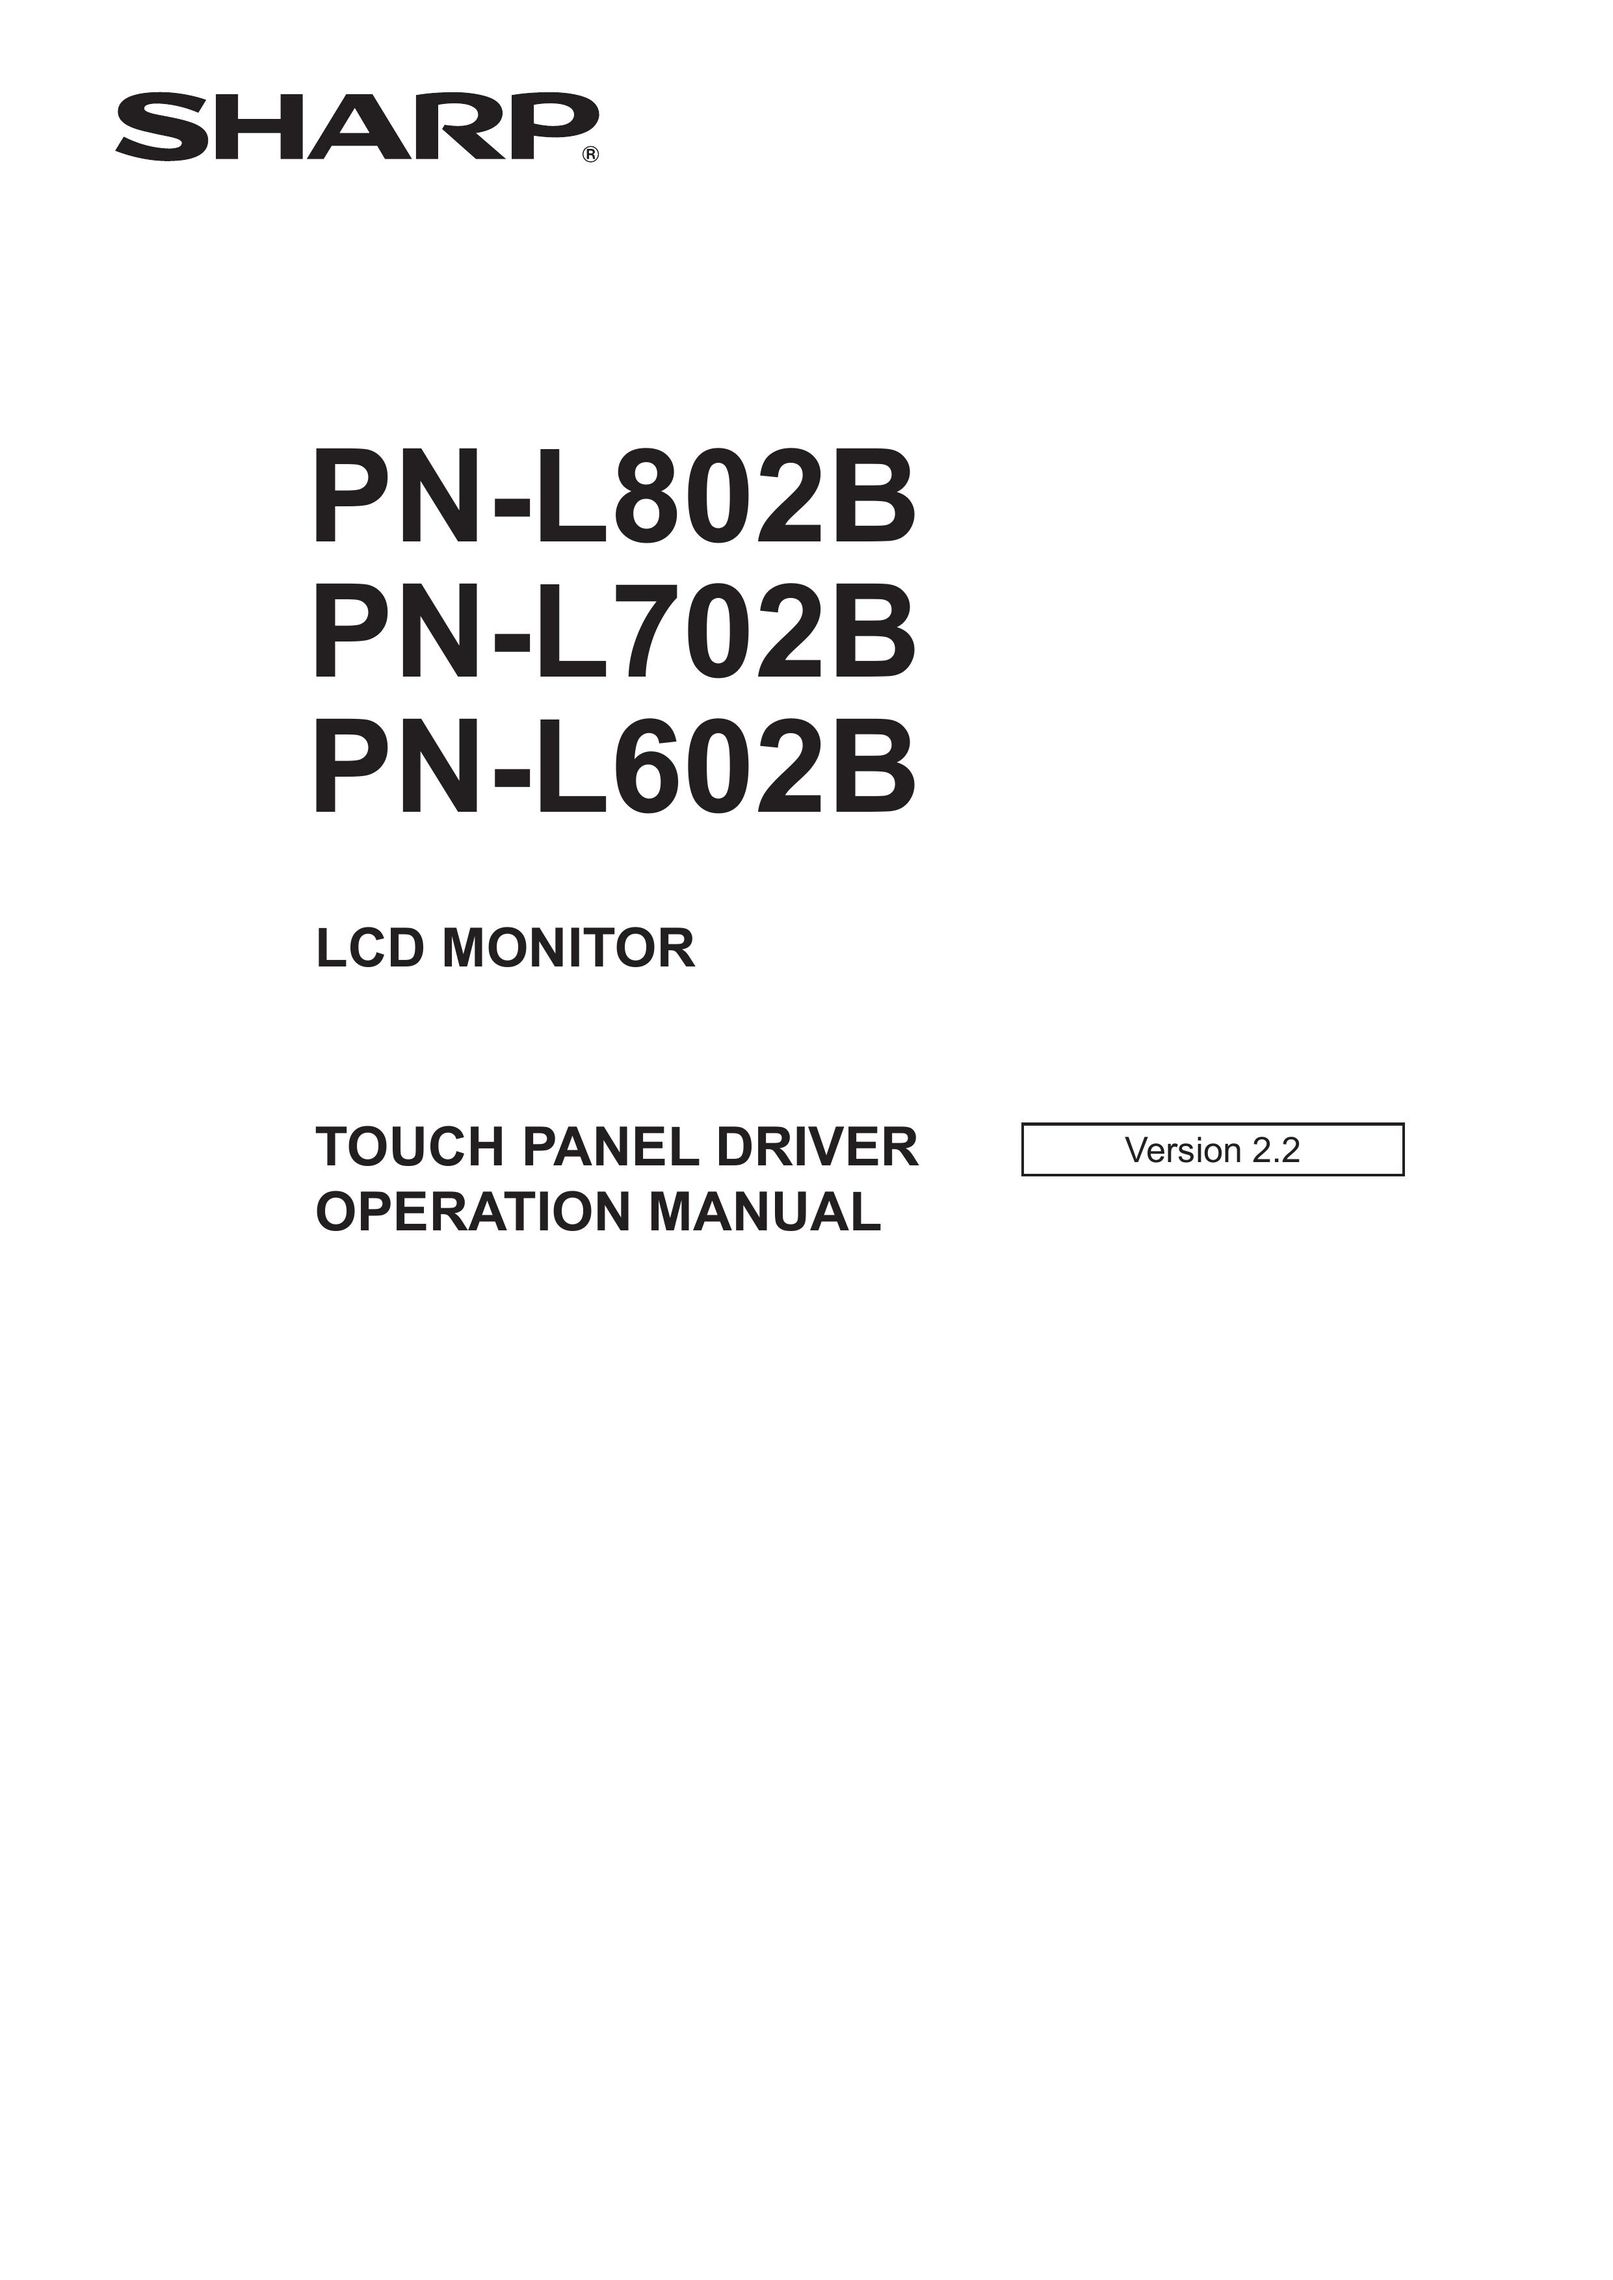 Sharp PN-L802B Computer Monitor User Manual